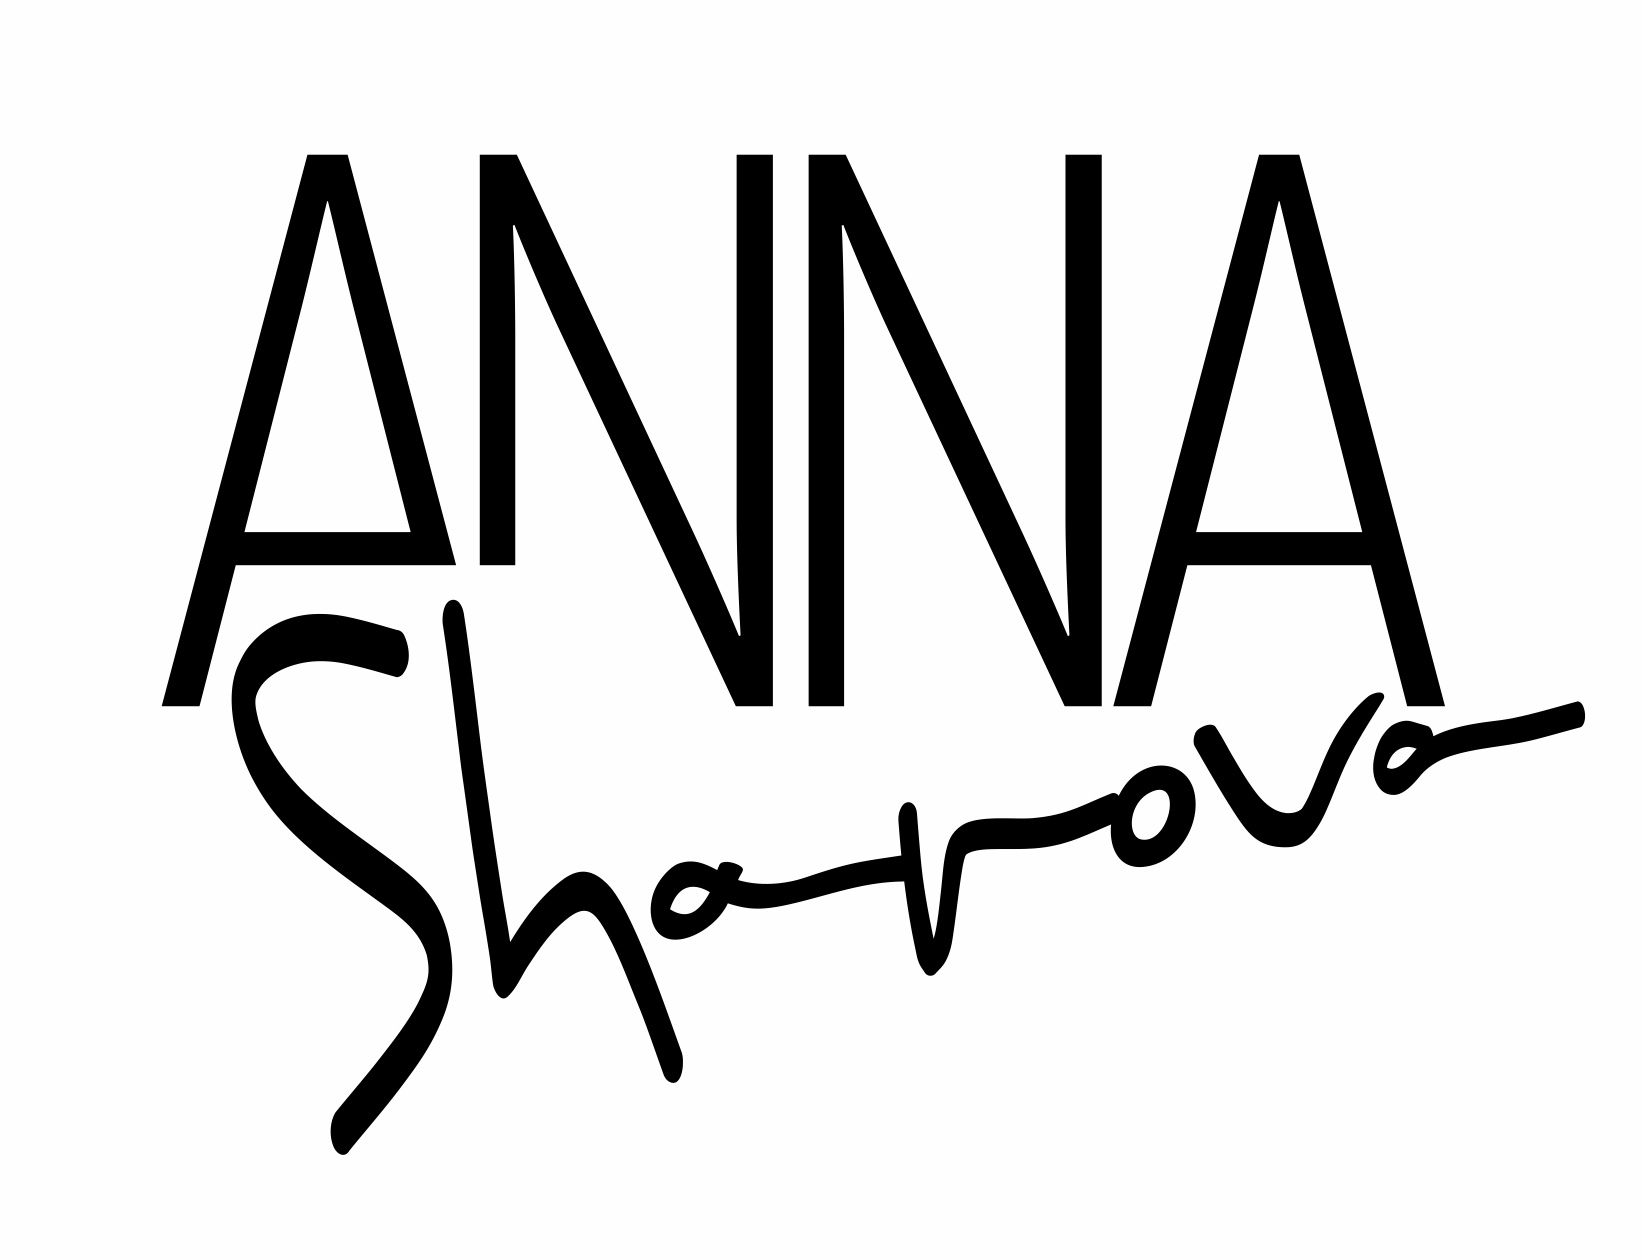 Anna Sharova